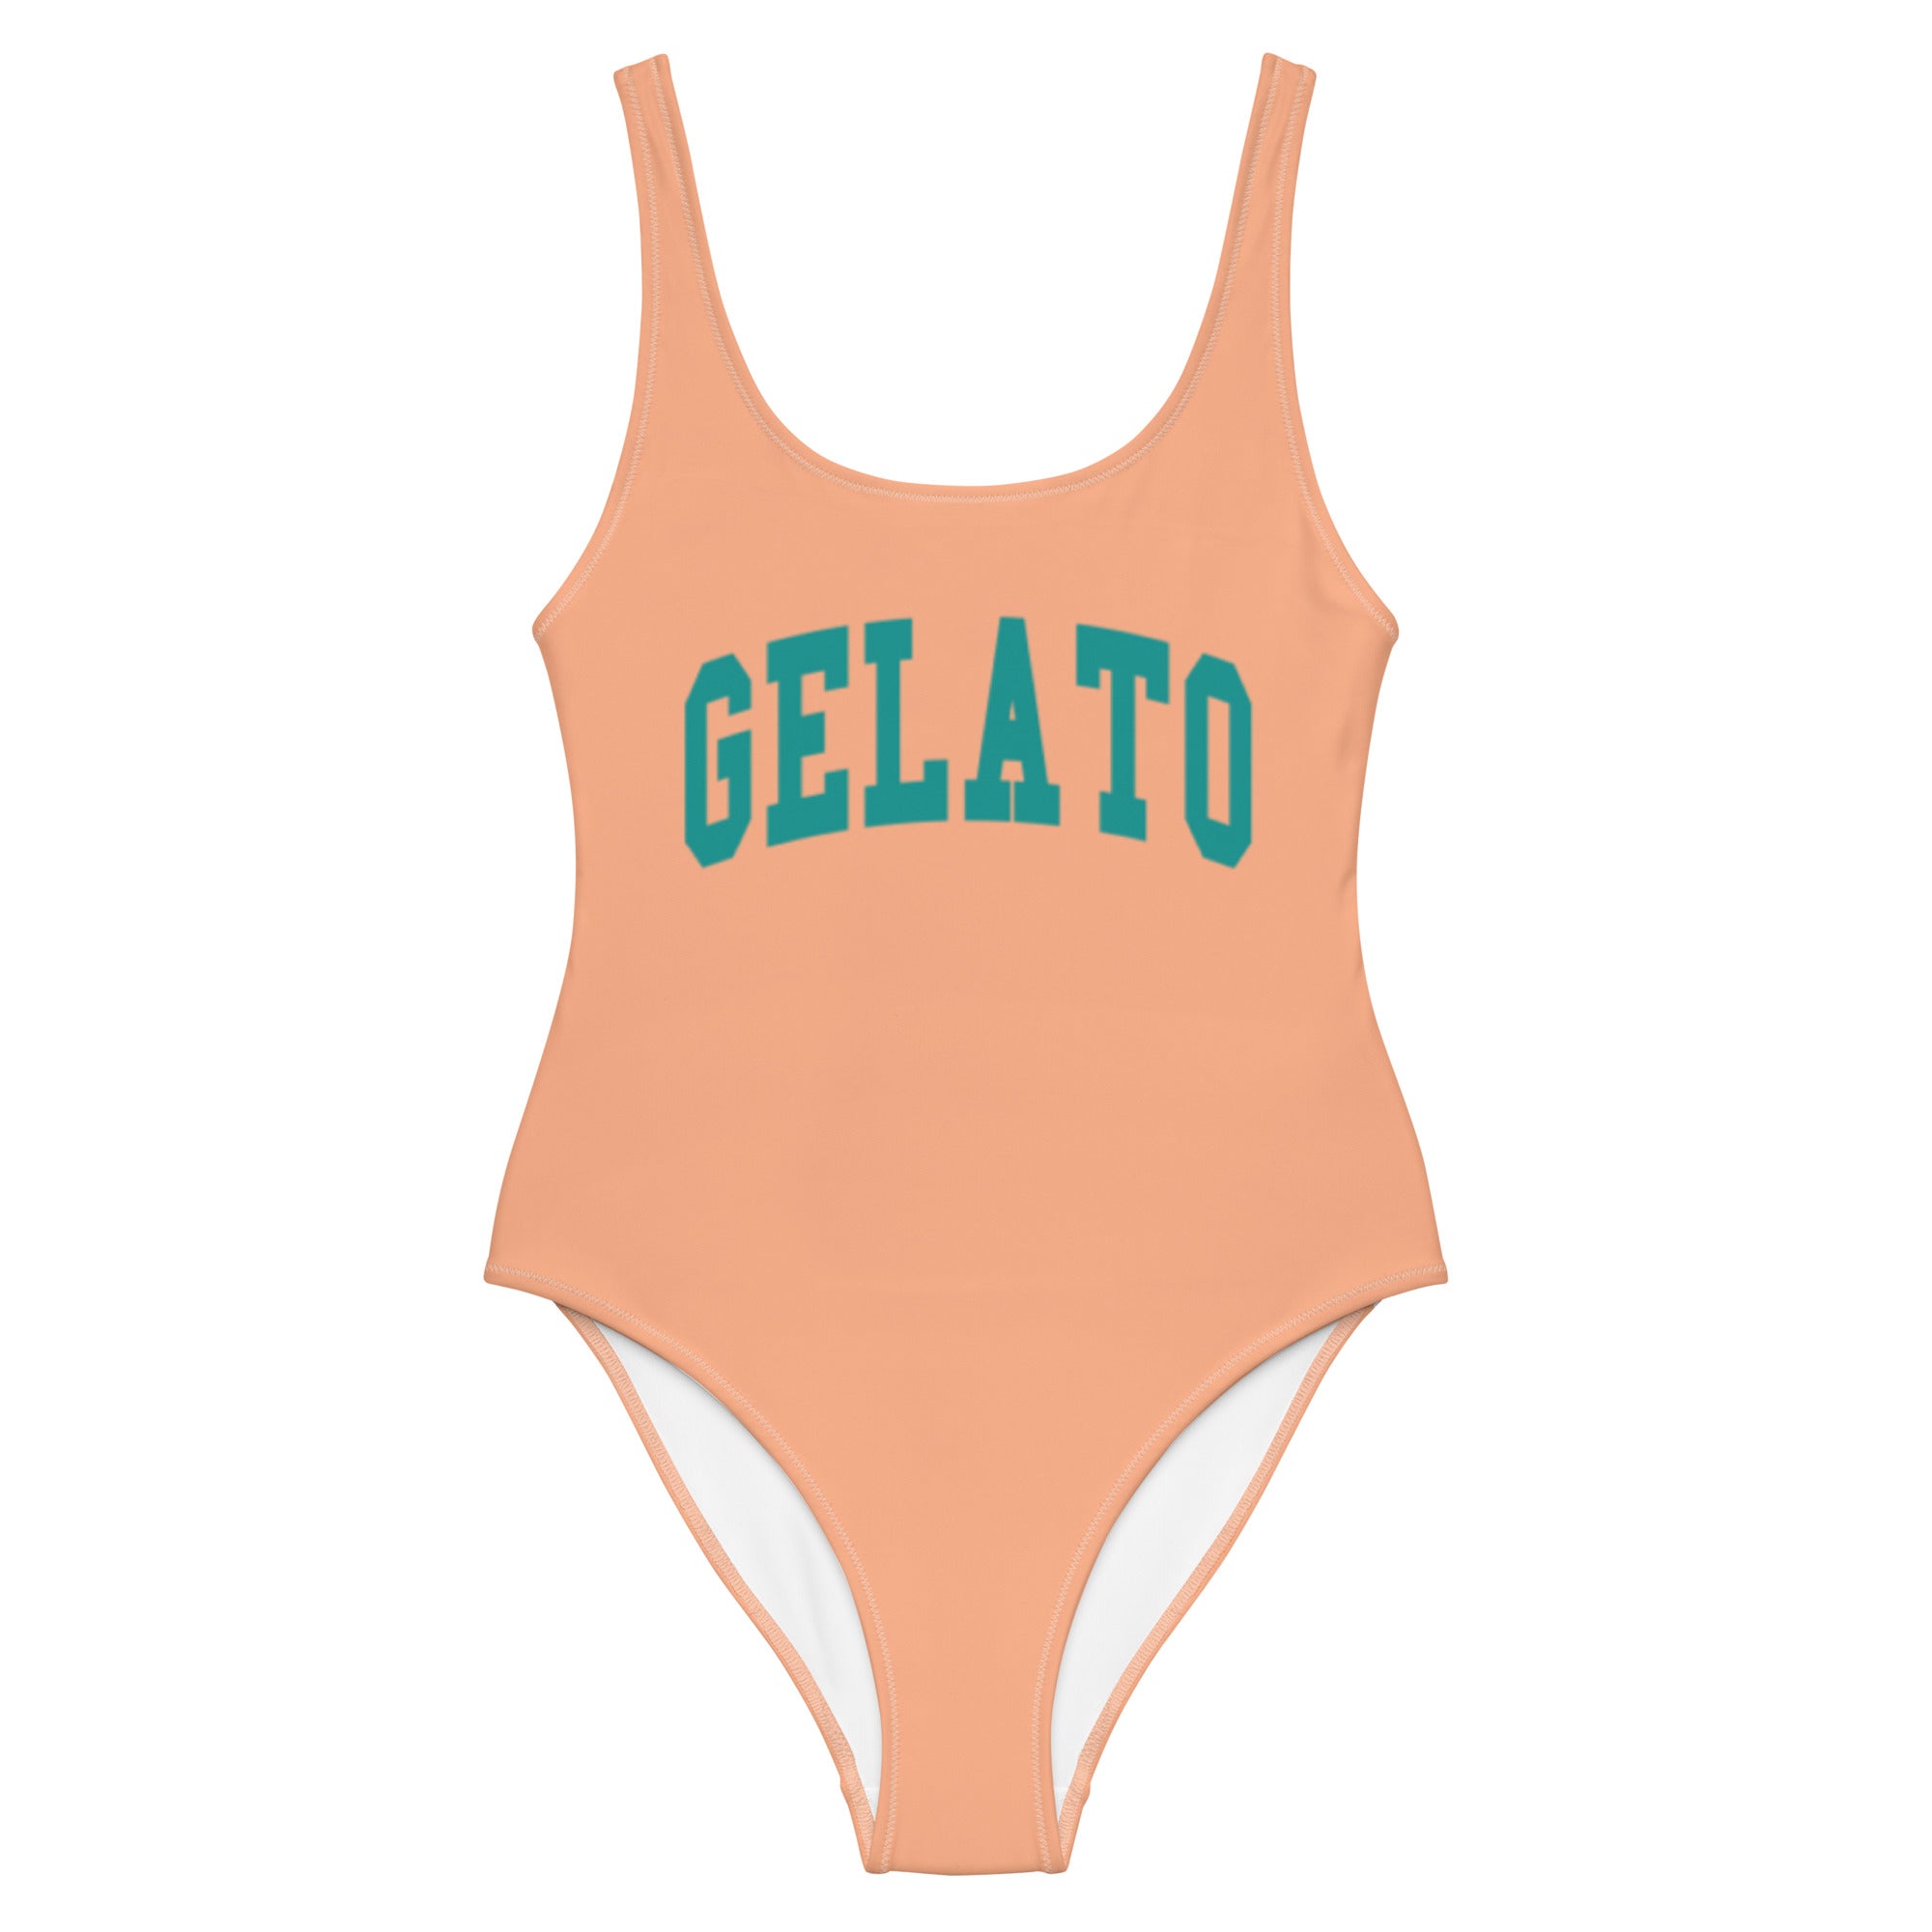 Gelato - Swimsuit - The Refined Spirit